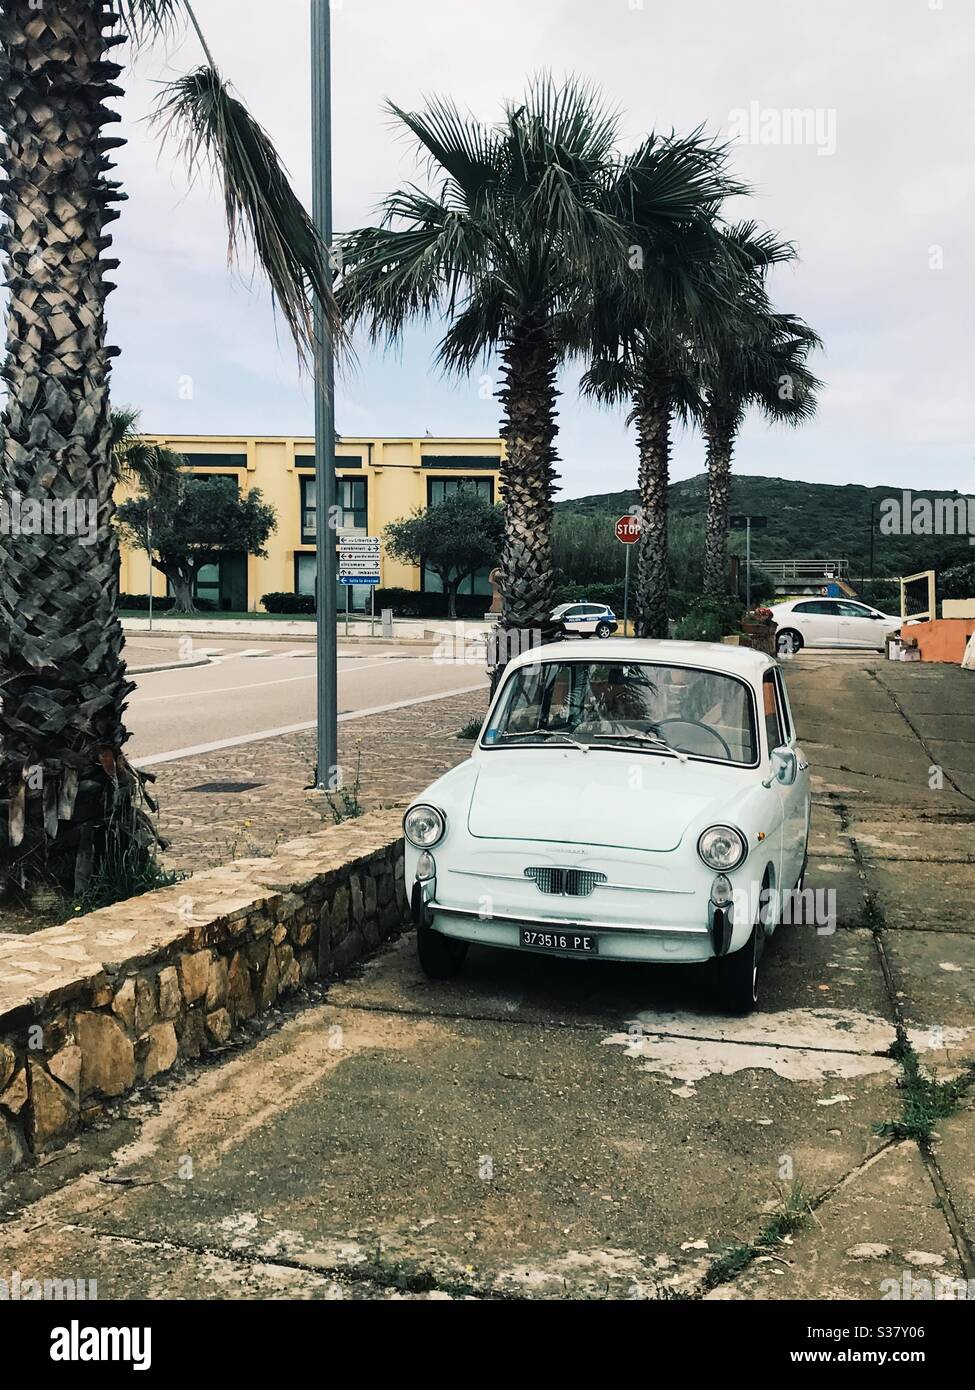 Retro Italian green car parked in a seaside town in Sardinia. Italy. Stock Photo